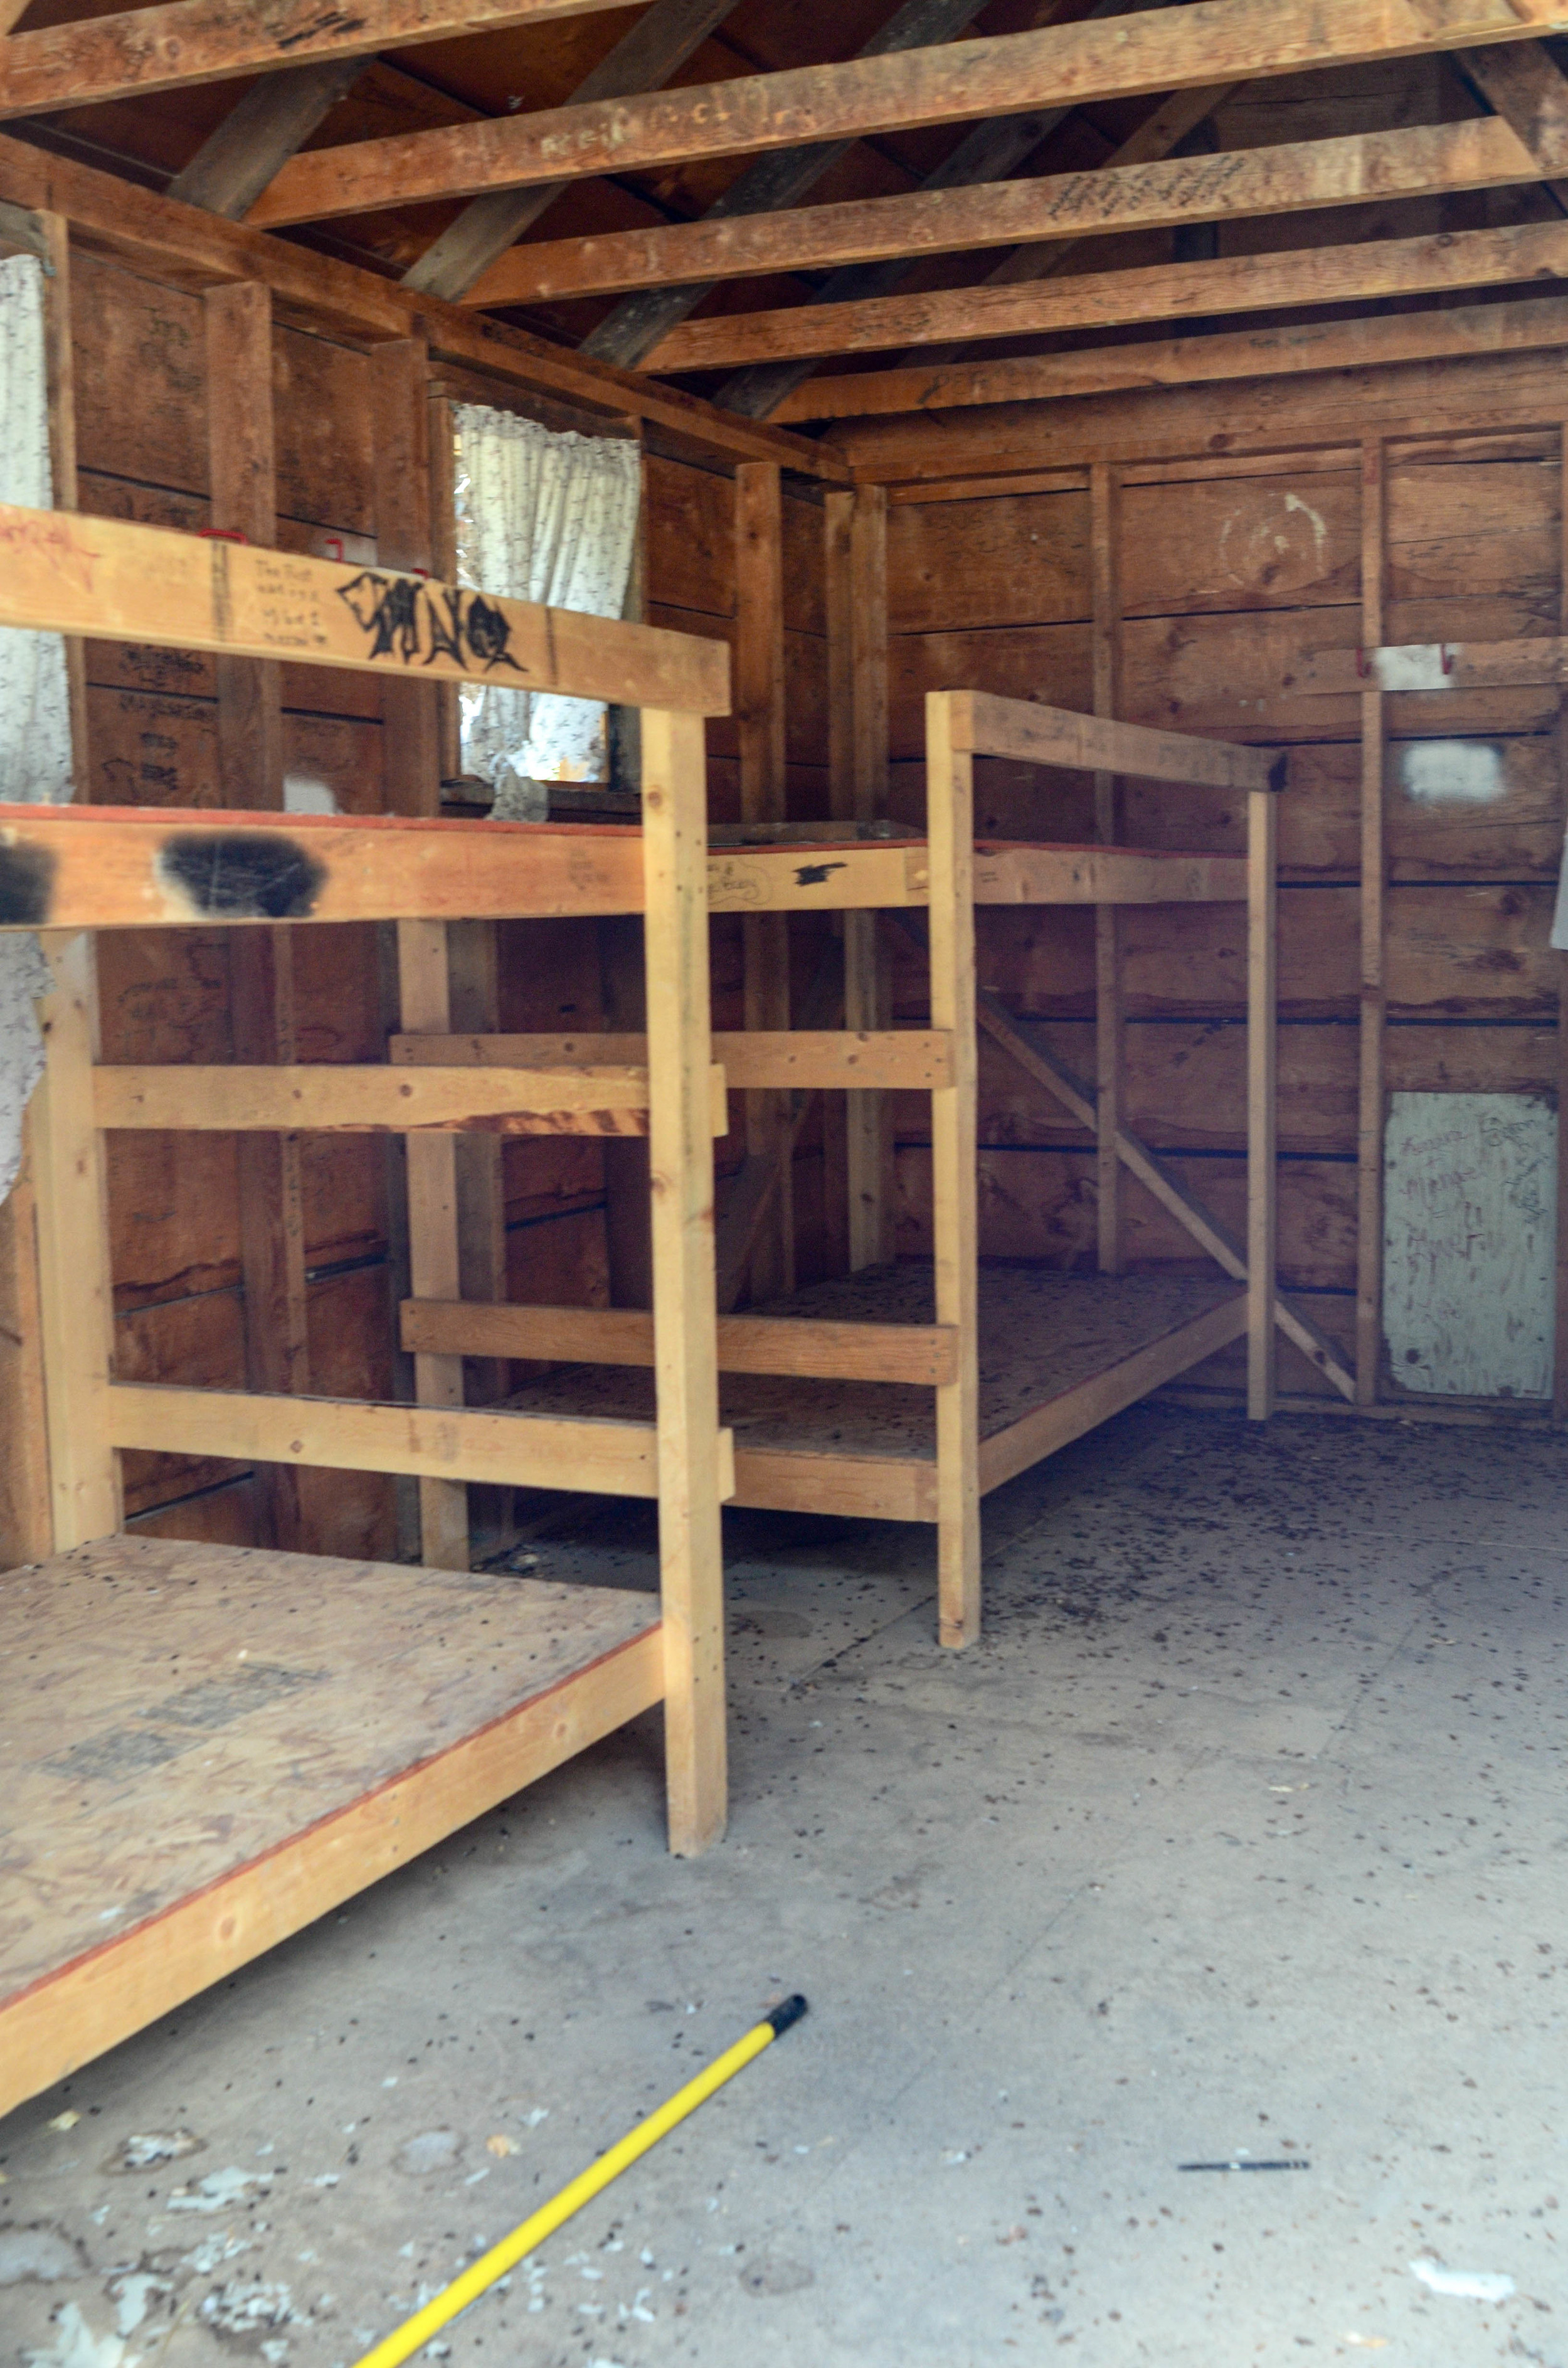 Old bunk beds inside cabins